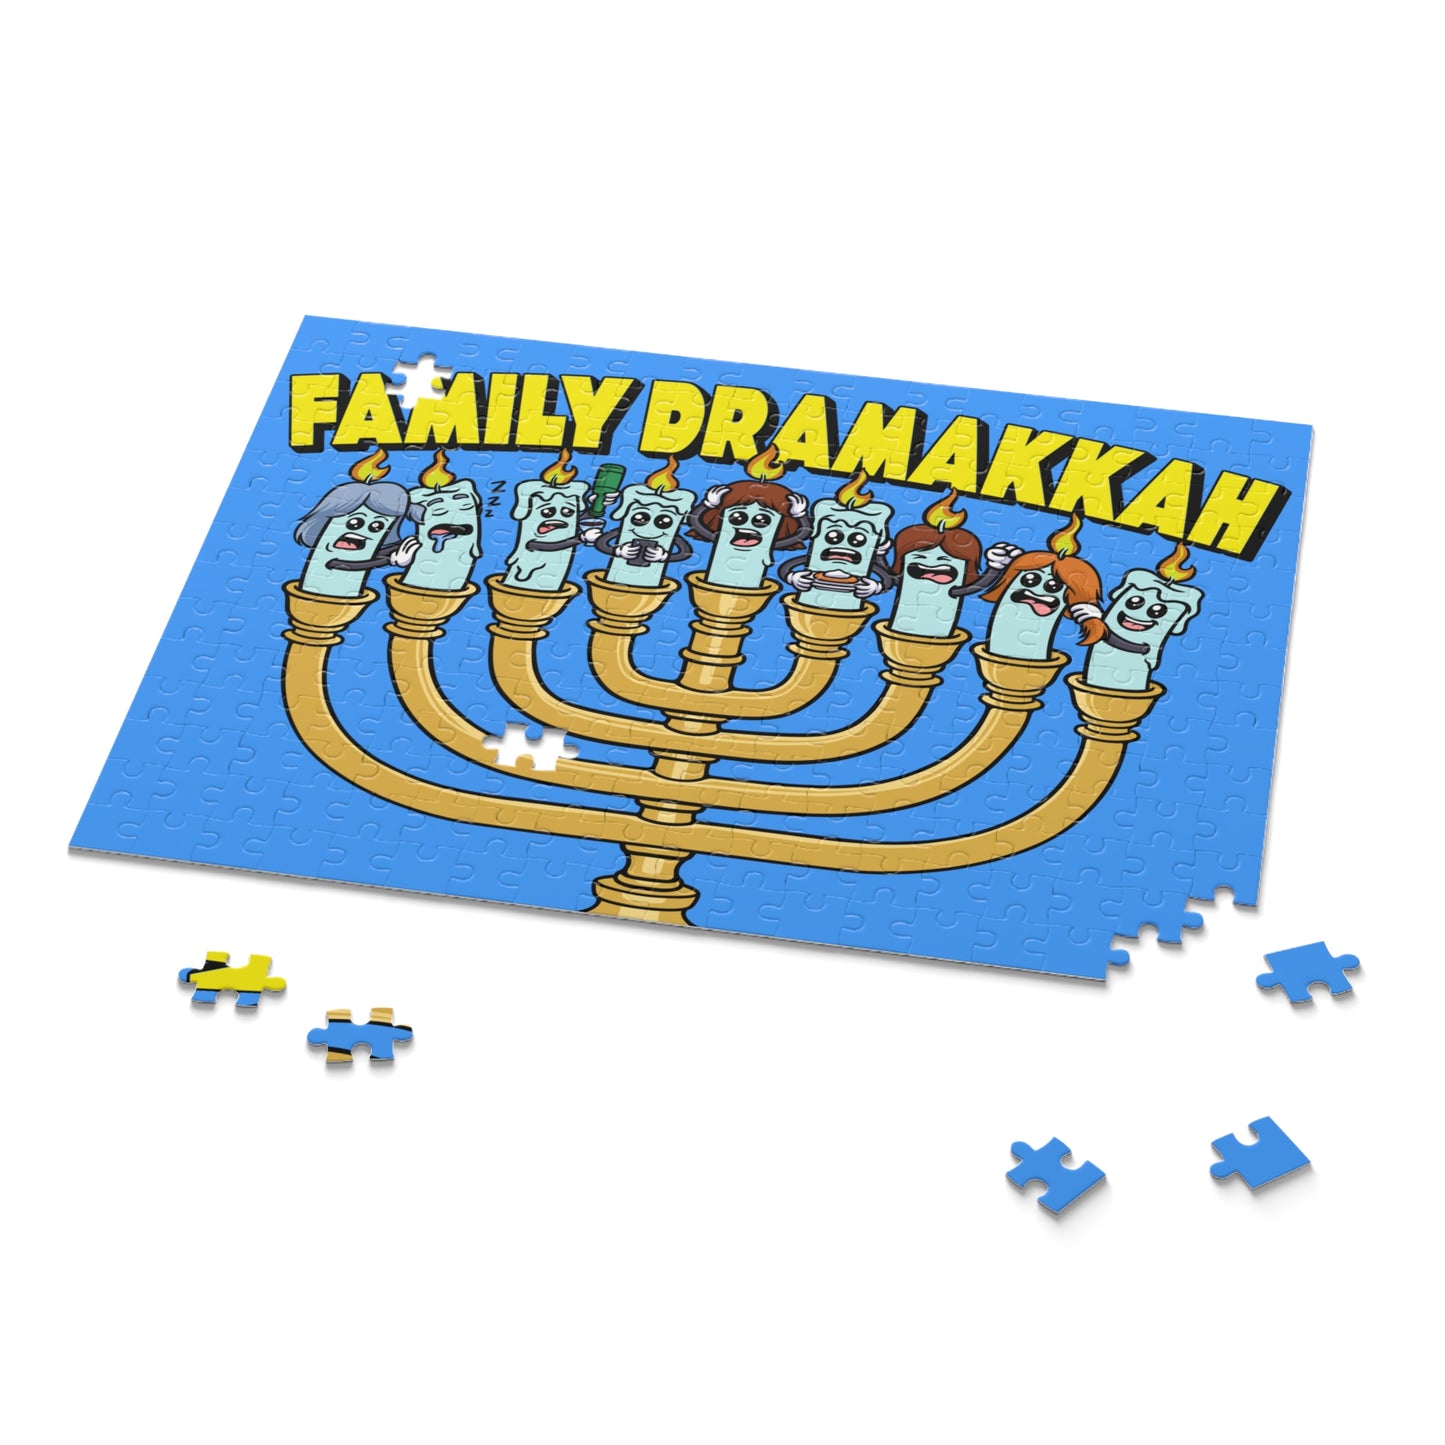 Family Dramakkah Puzzle - Blue